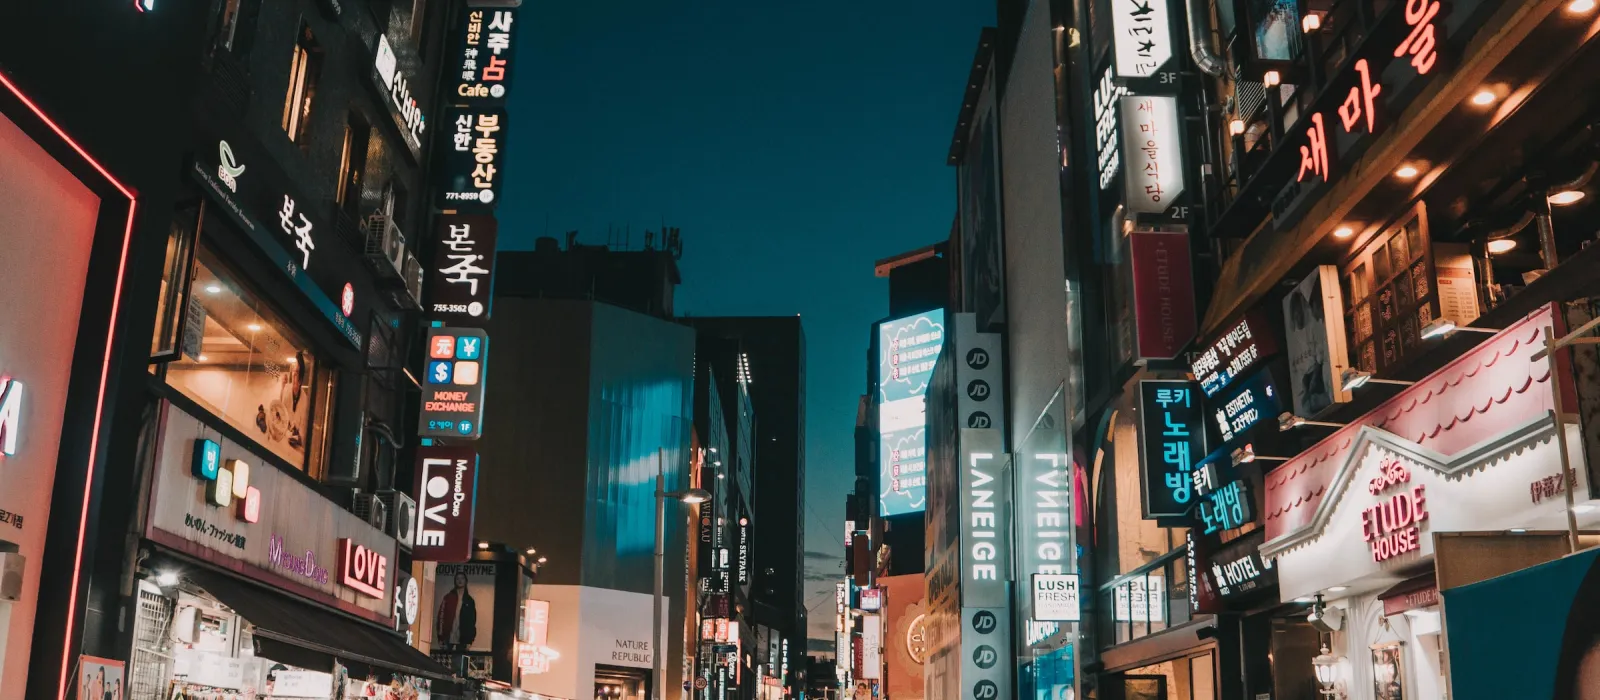 Shopping street at night in South Korea